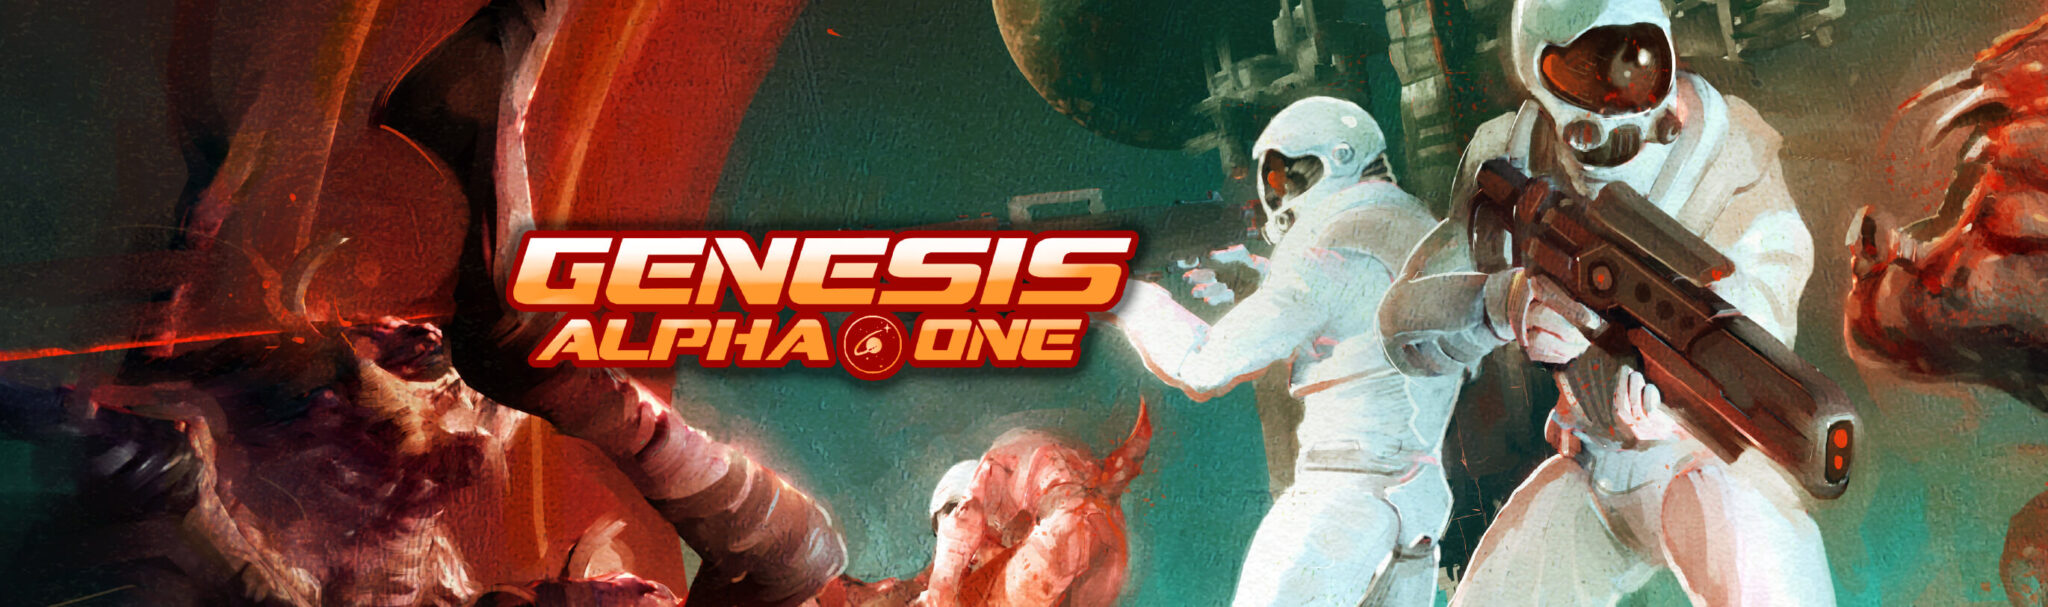 Genesis Alpha One | Genesis Alpha One PS4 | Team17 Digital LTD - The ...